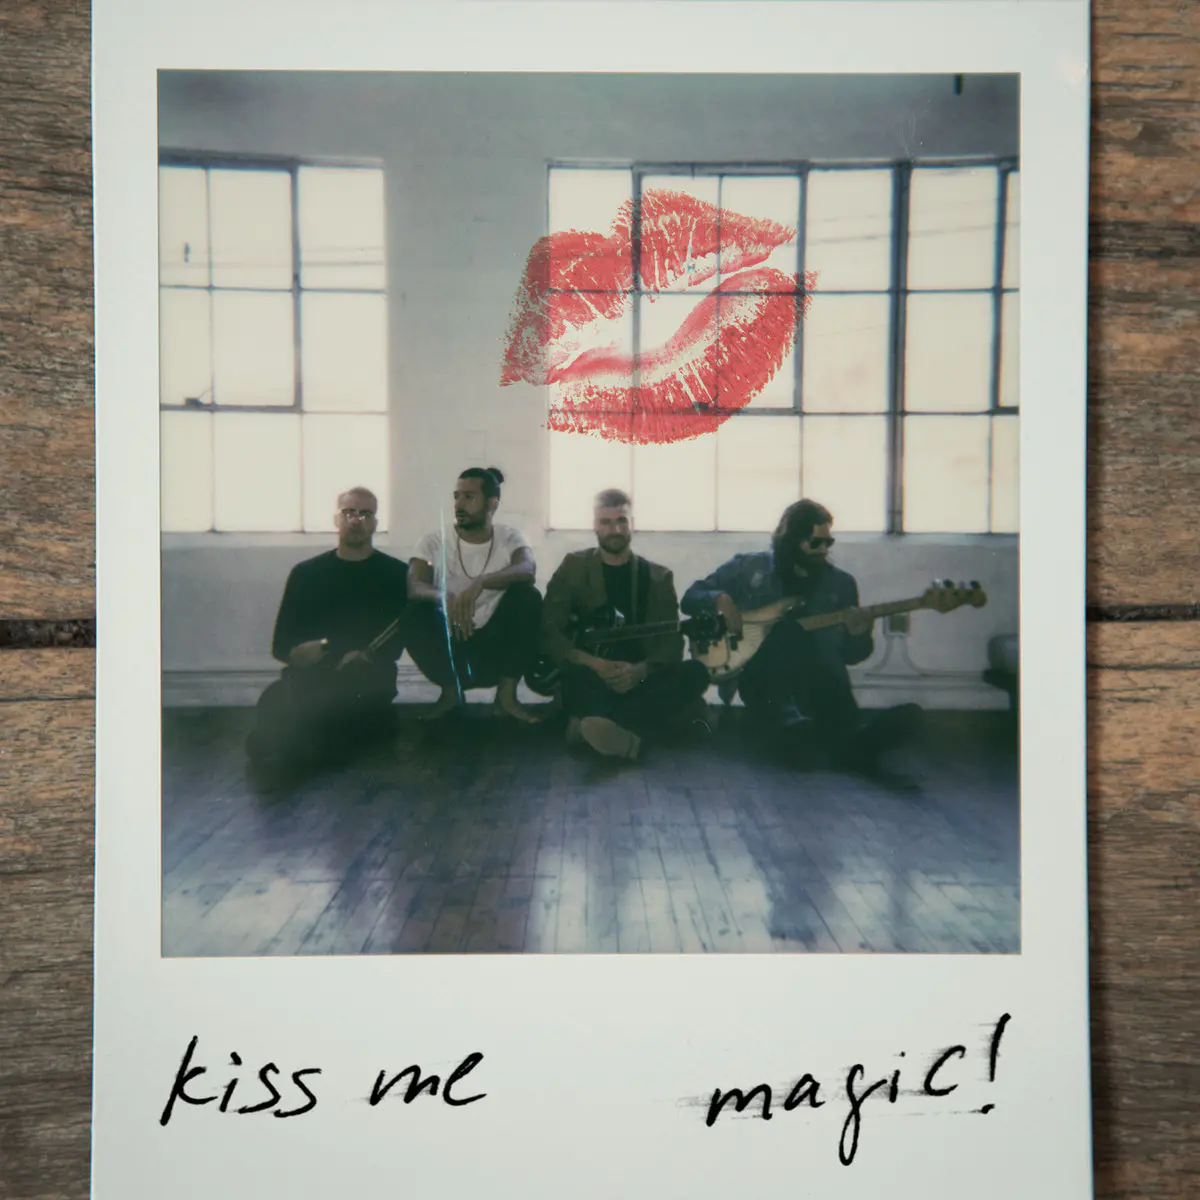 Magic kiss lyrics one Jun